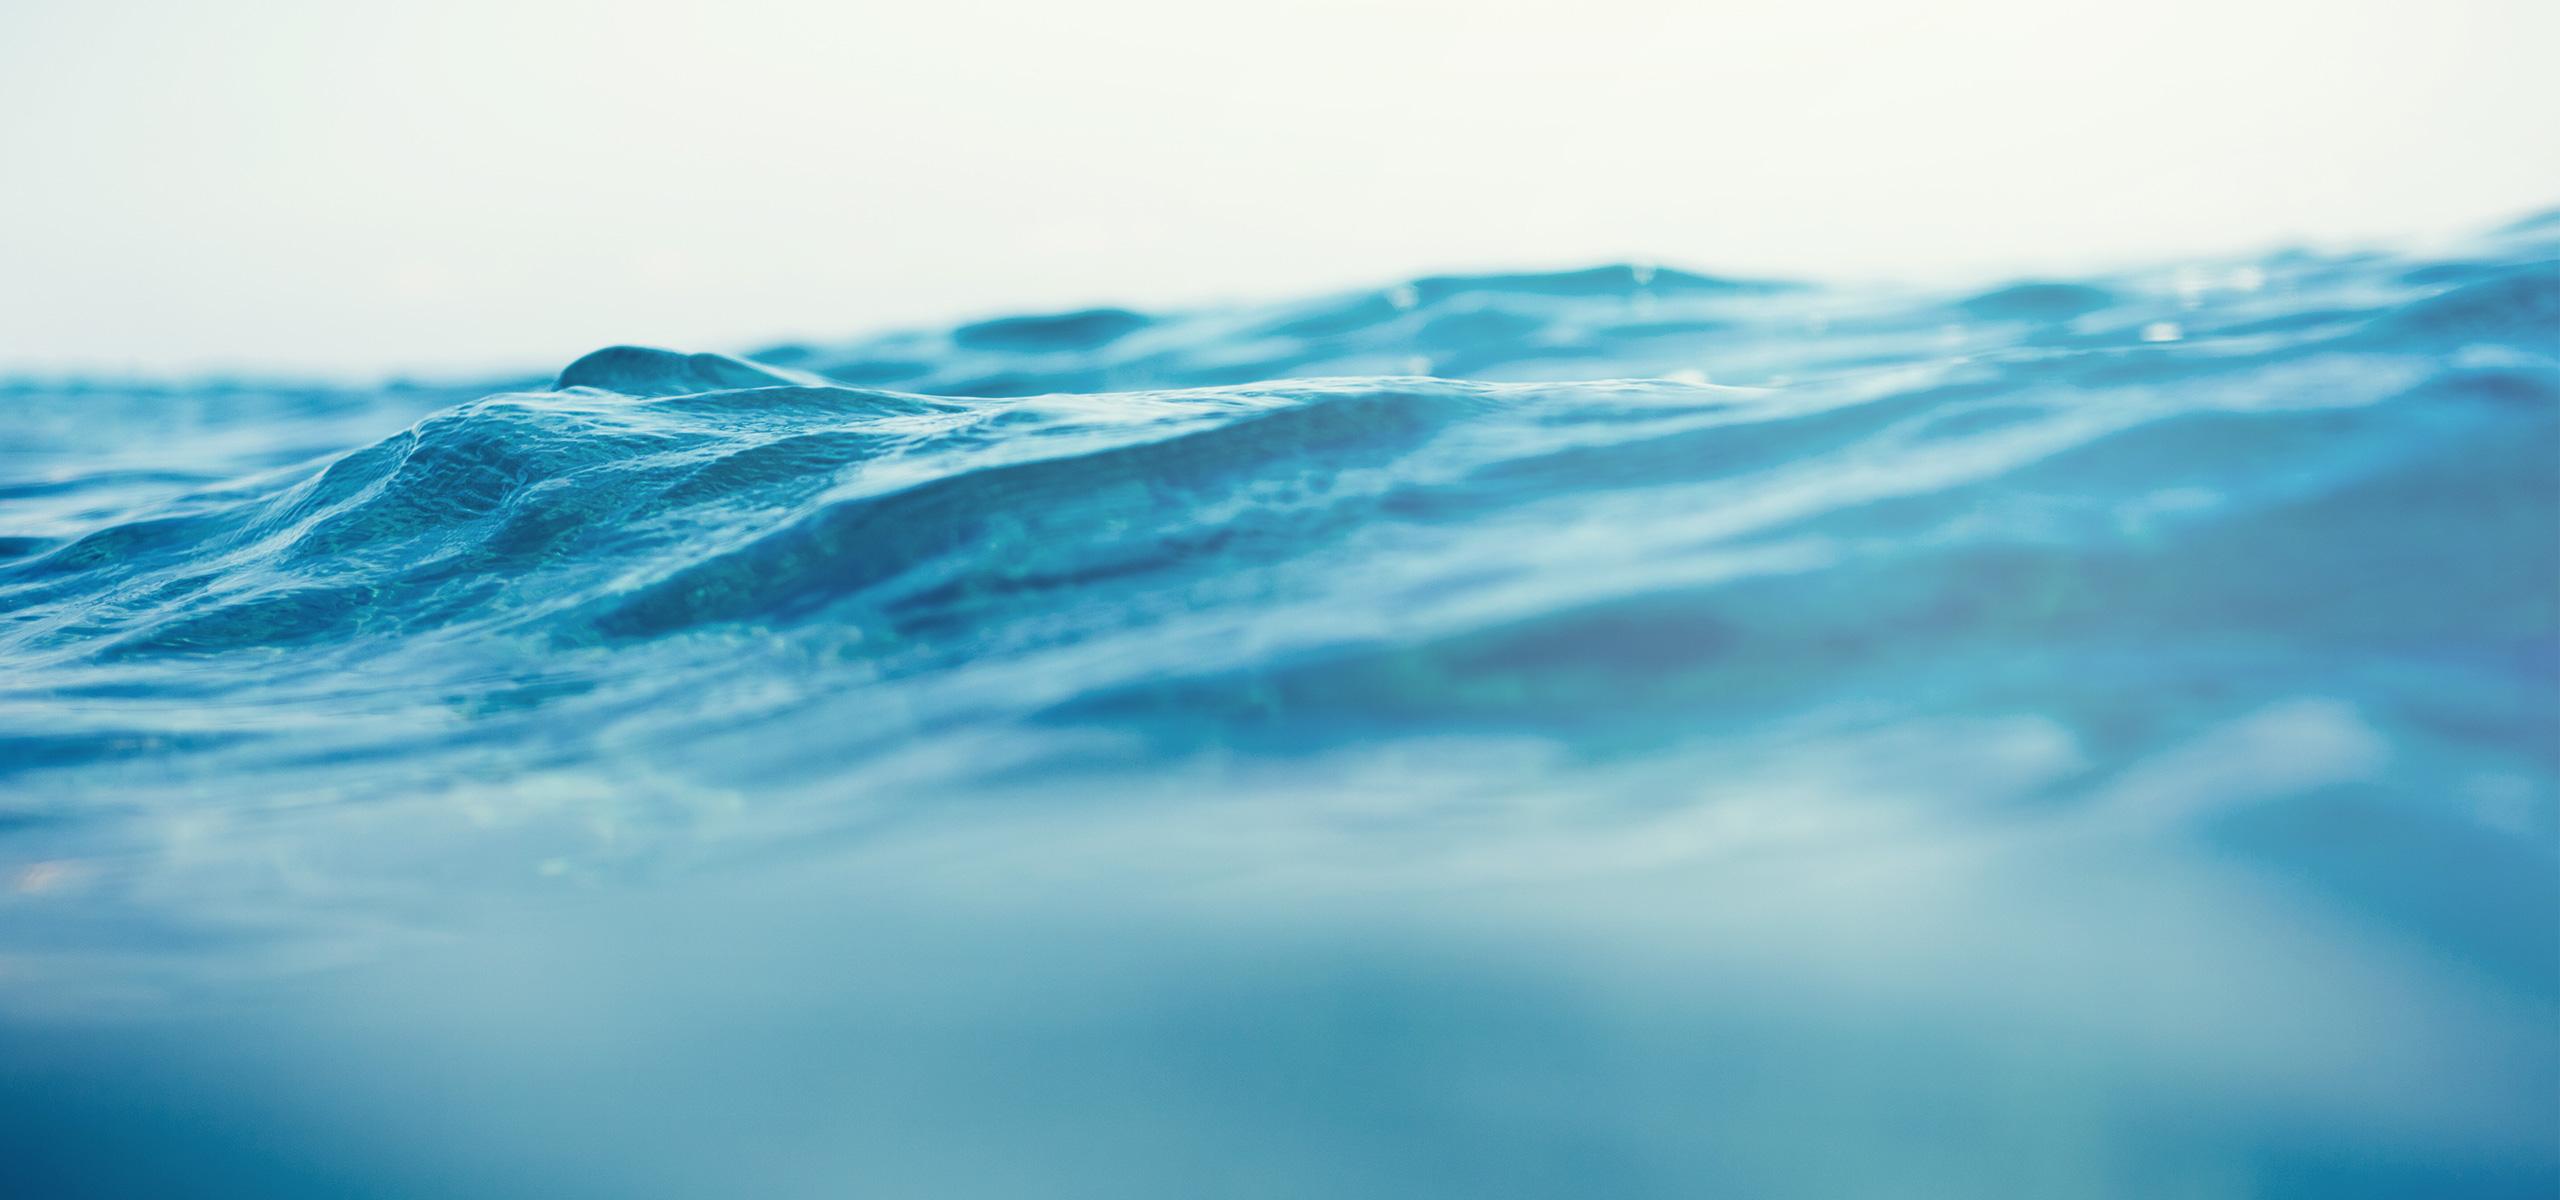 BRITA pianeta più sano onde oceano